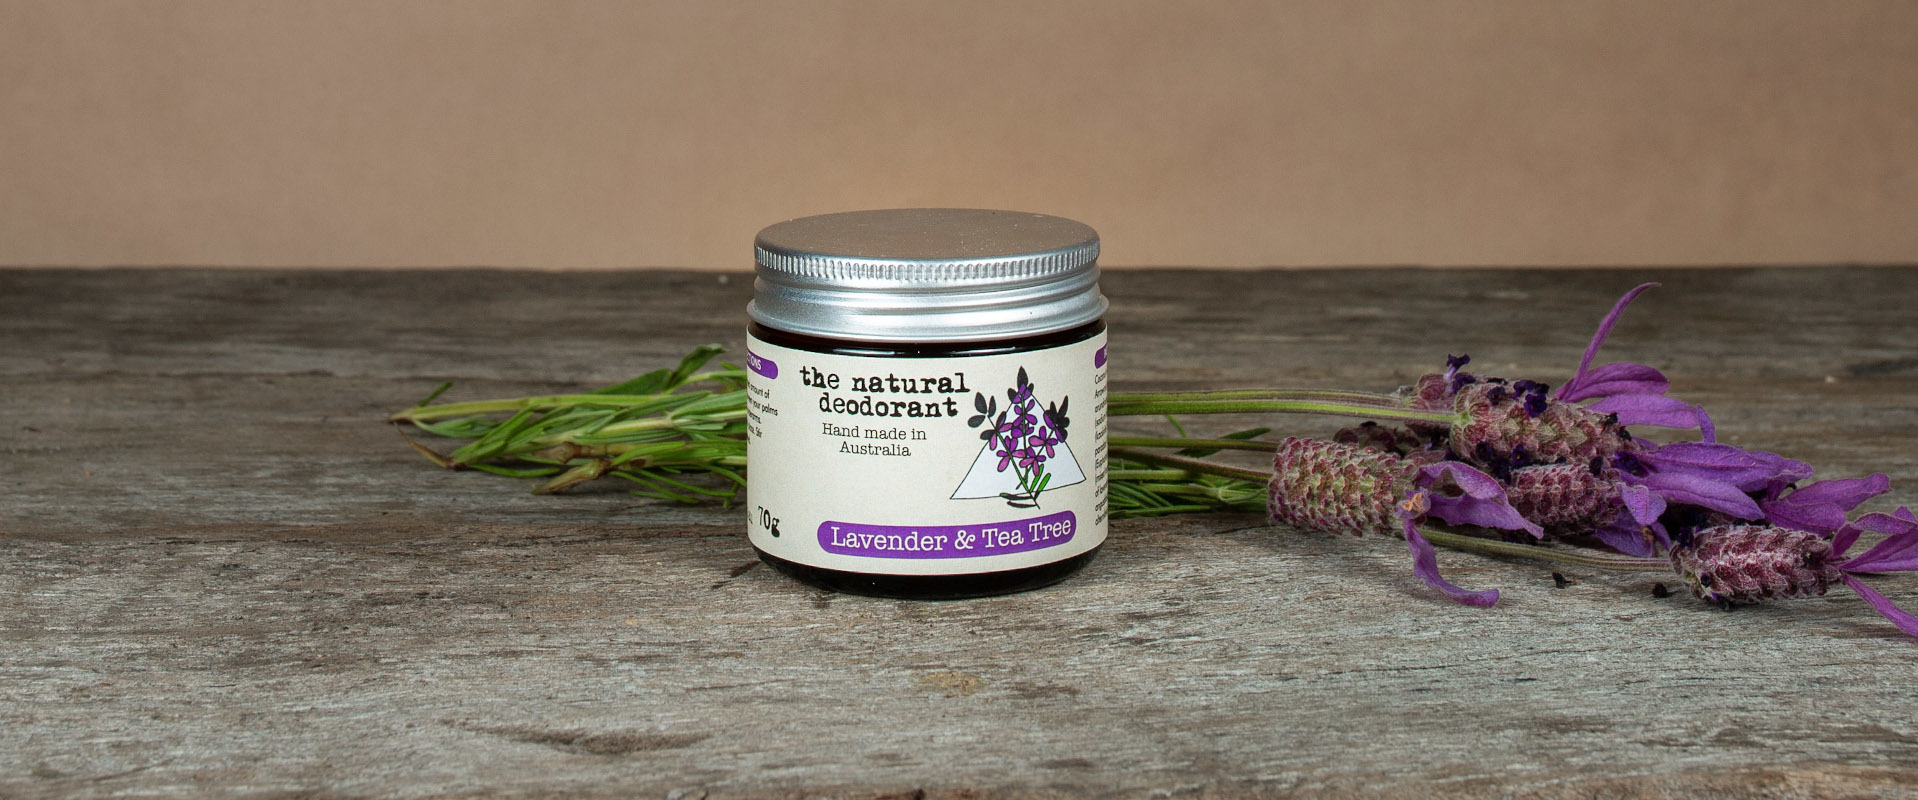 The Natural Deodorant Jar (Lavender & Tea Tree), The Natural Deodorant